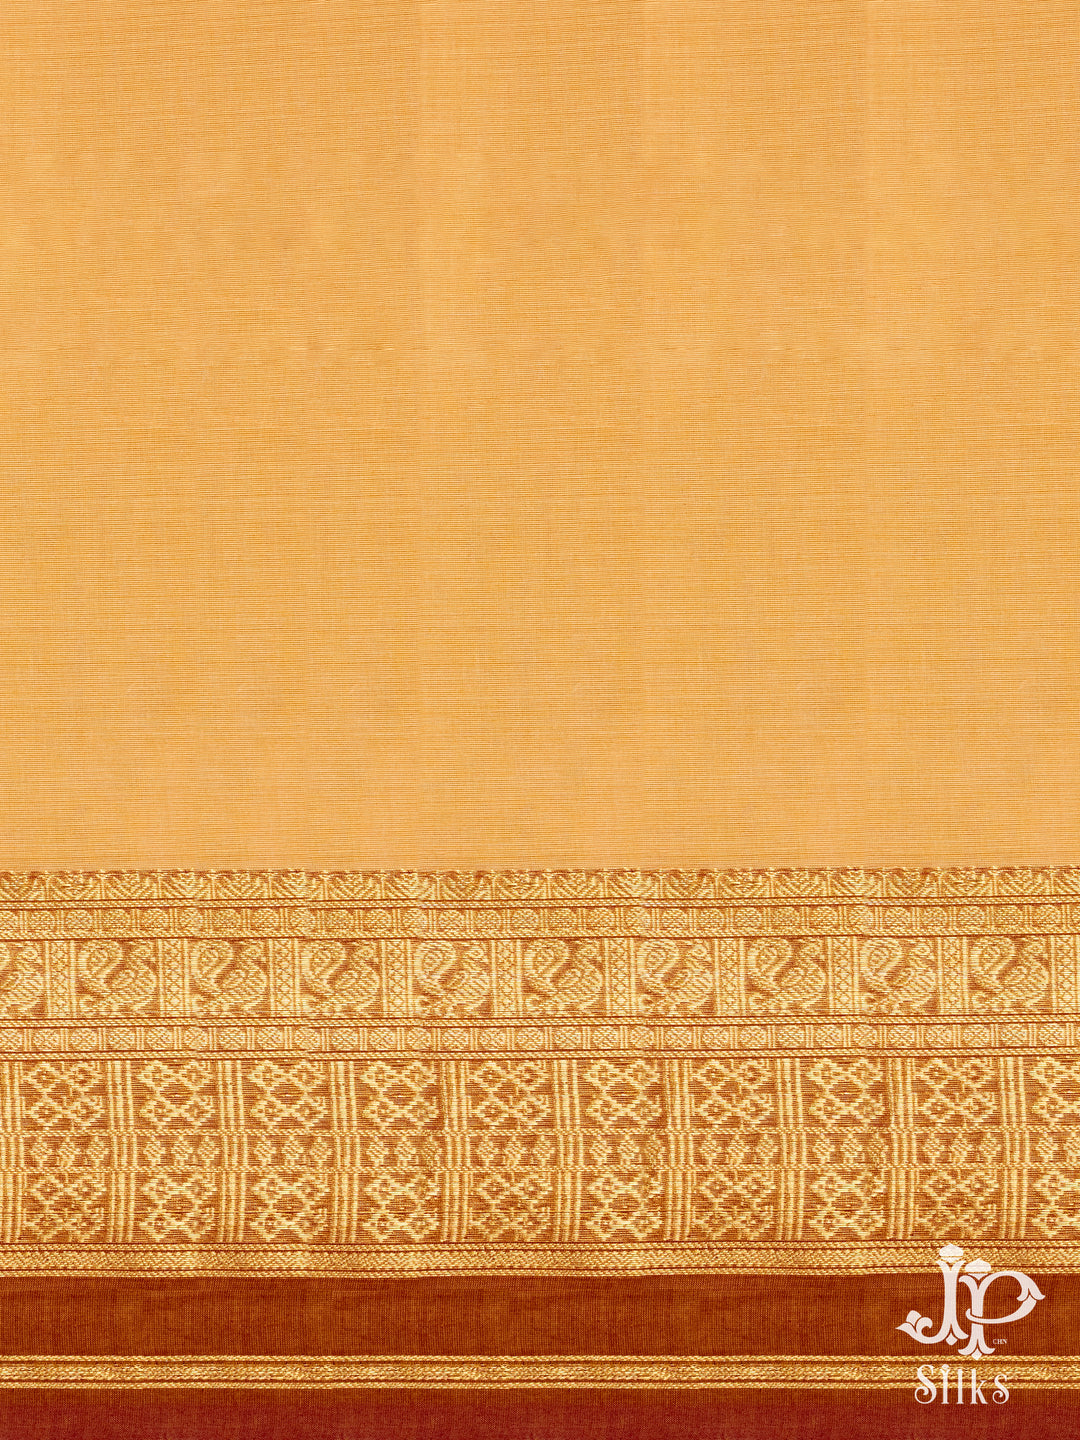 Light Gold and Brown Cotton Saree - D9635 - VIew 2